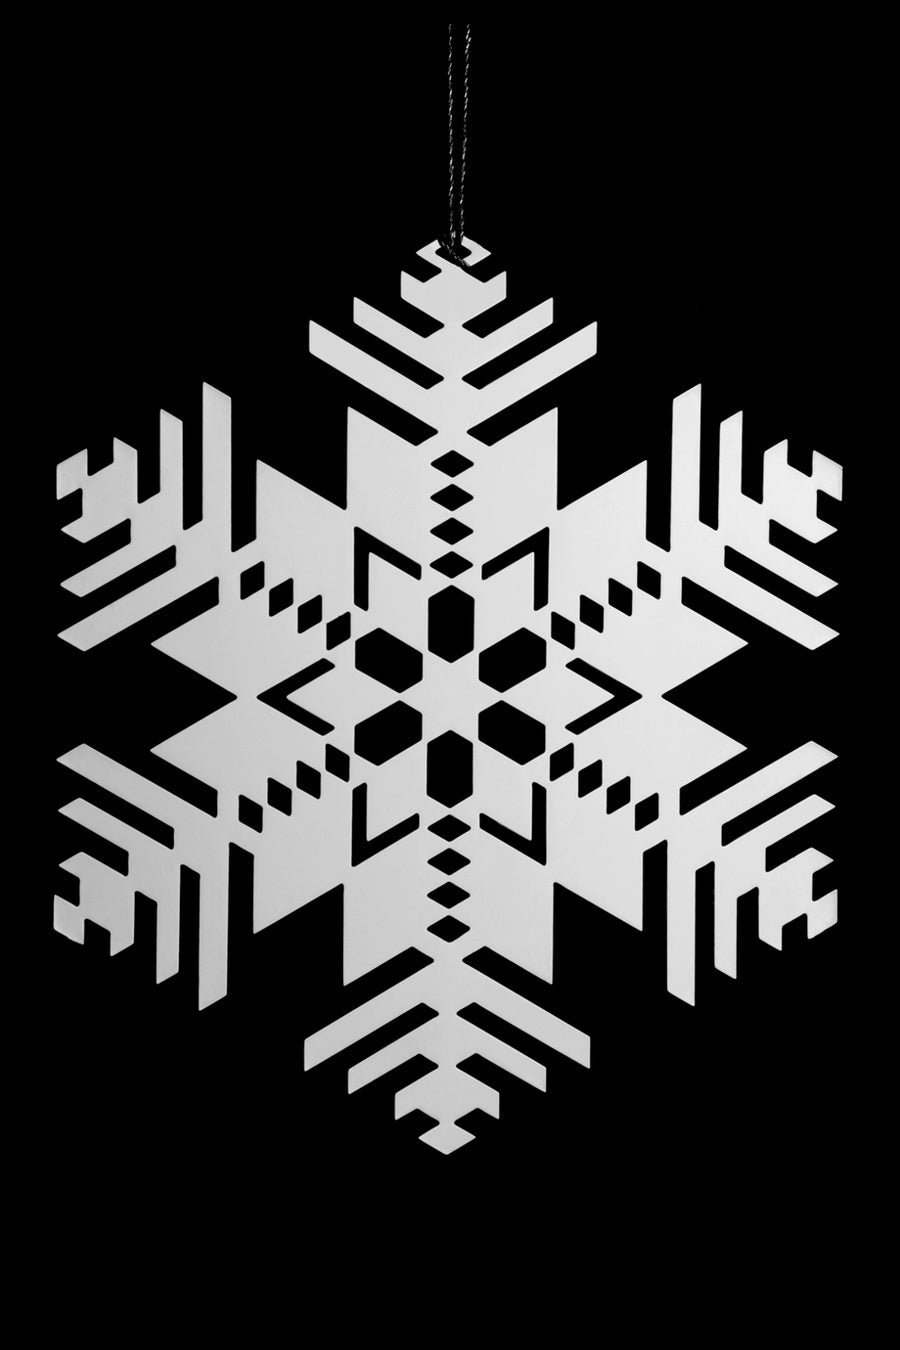 Snowflake 2D Ornament